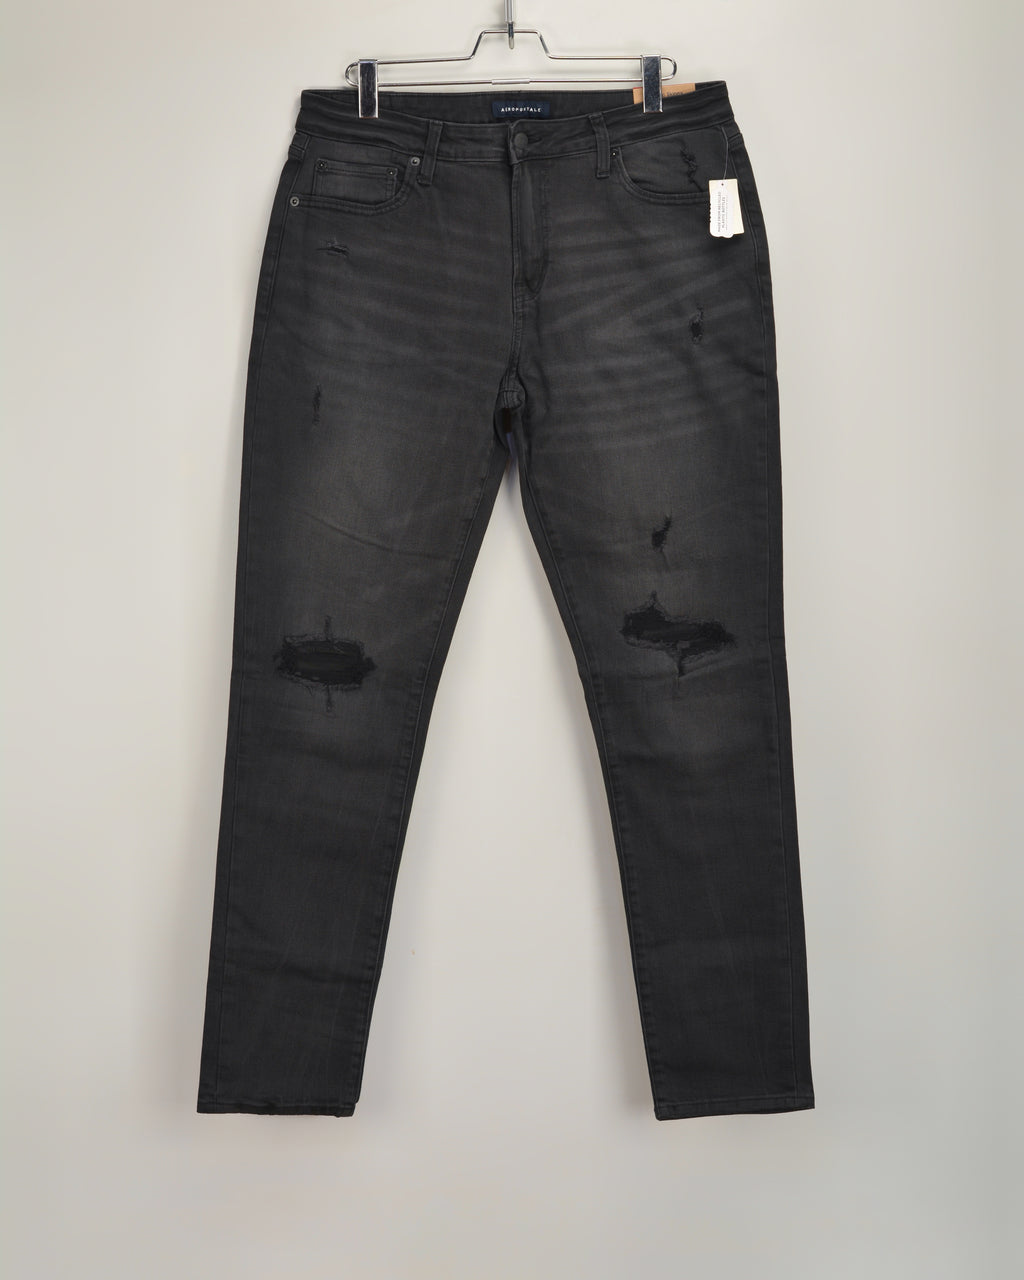 Jeans Skinny By Aeropostale Size: 4